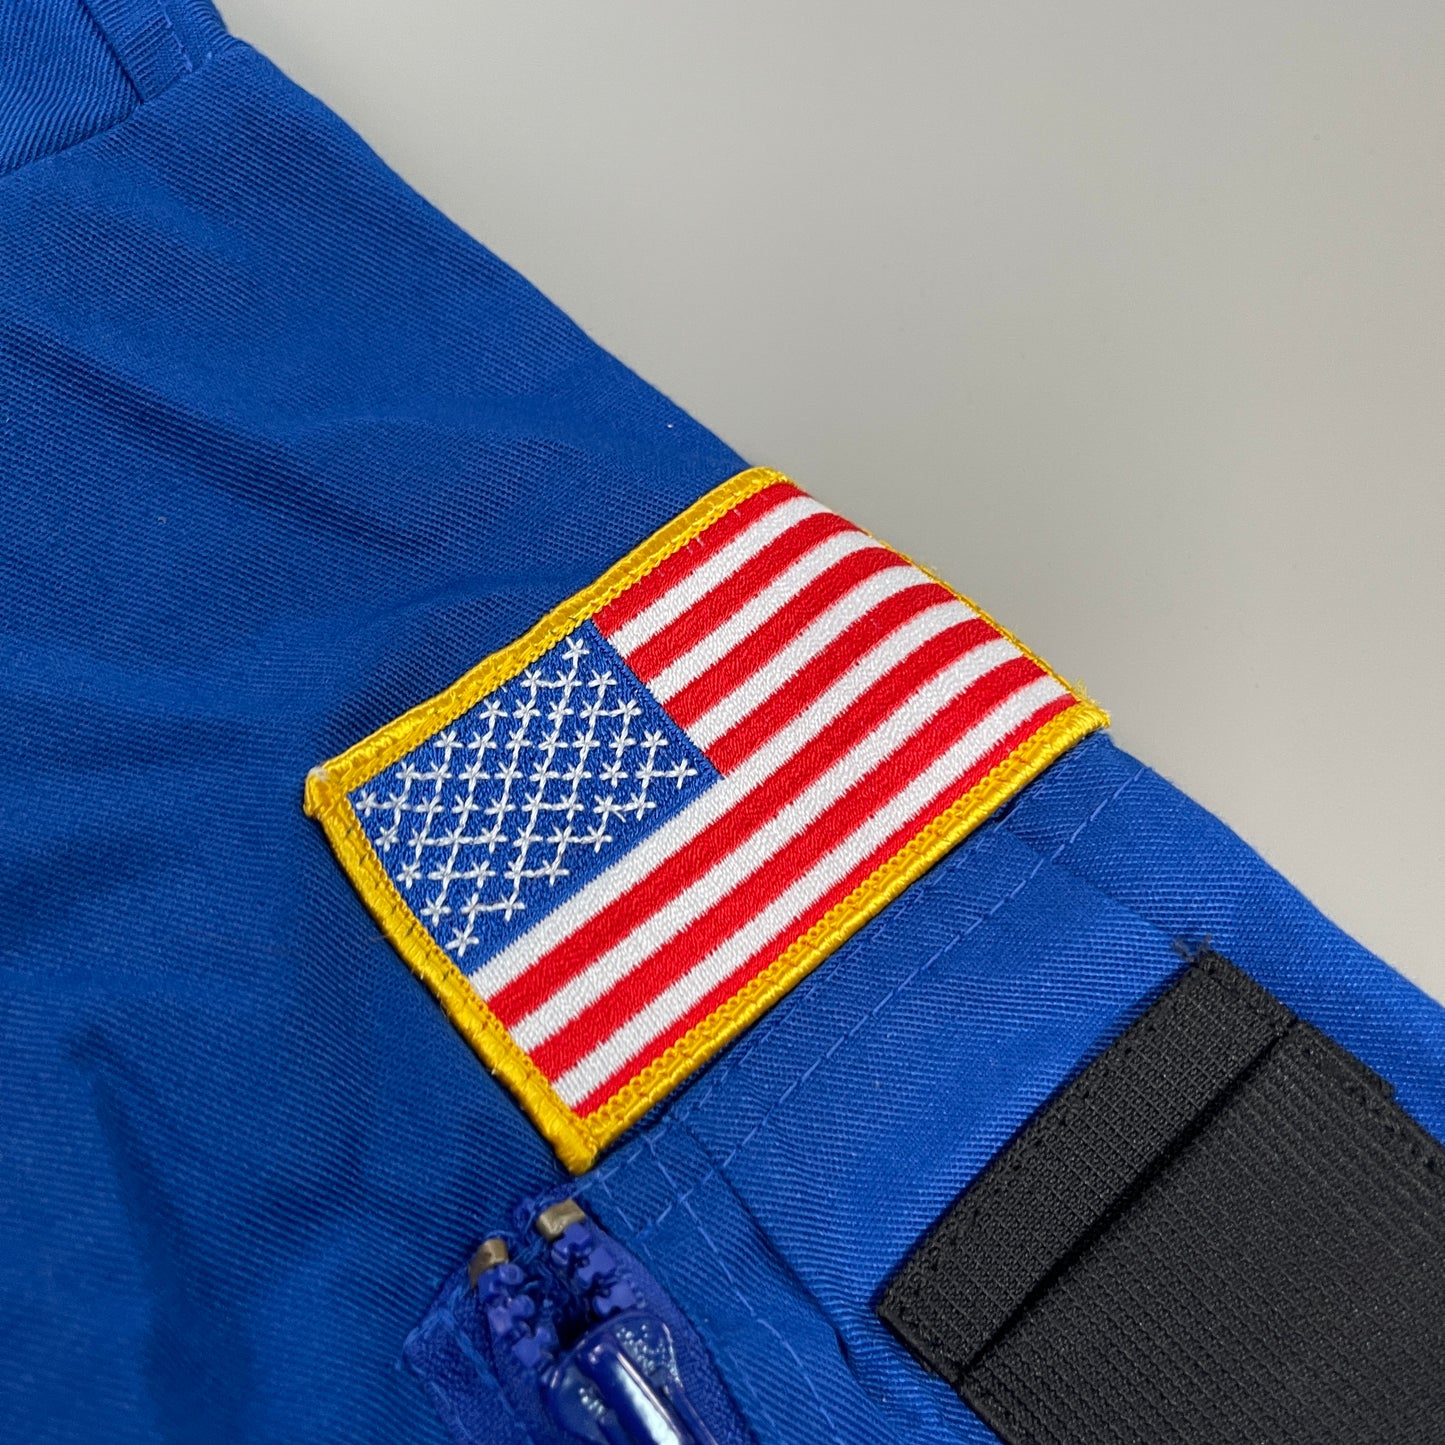 FLIGHT LINE NASA / International Space Station Jacket Men's Sz XXXL Blue (New)